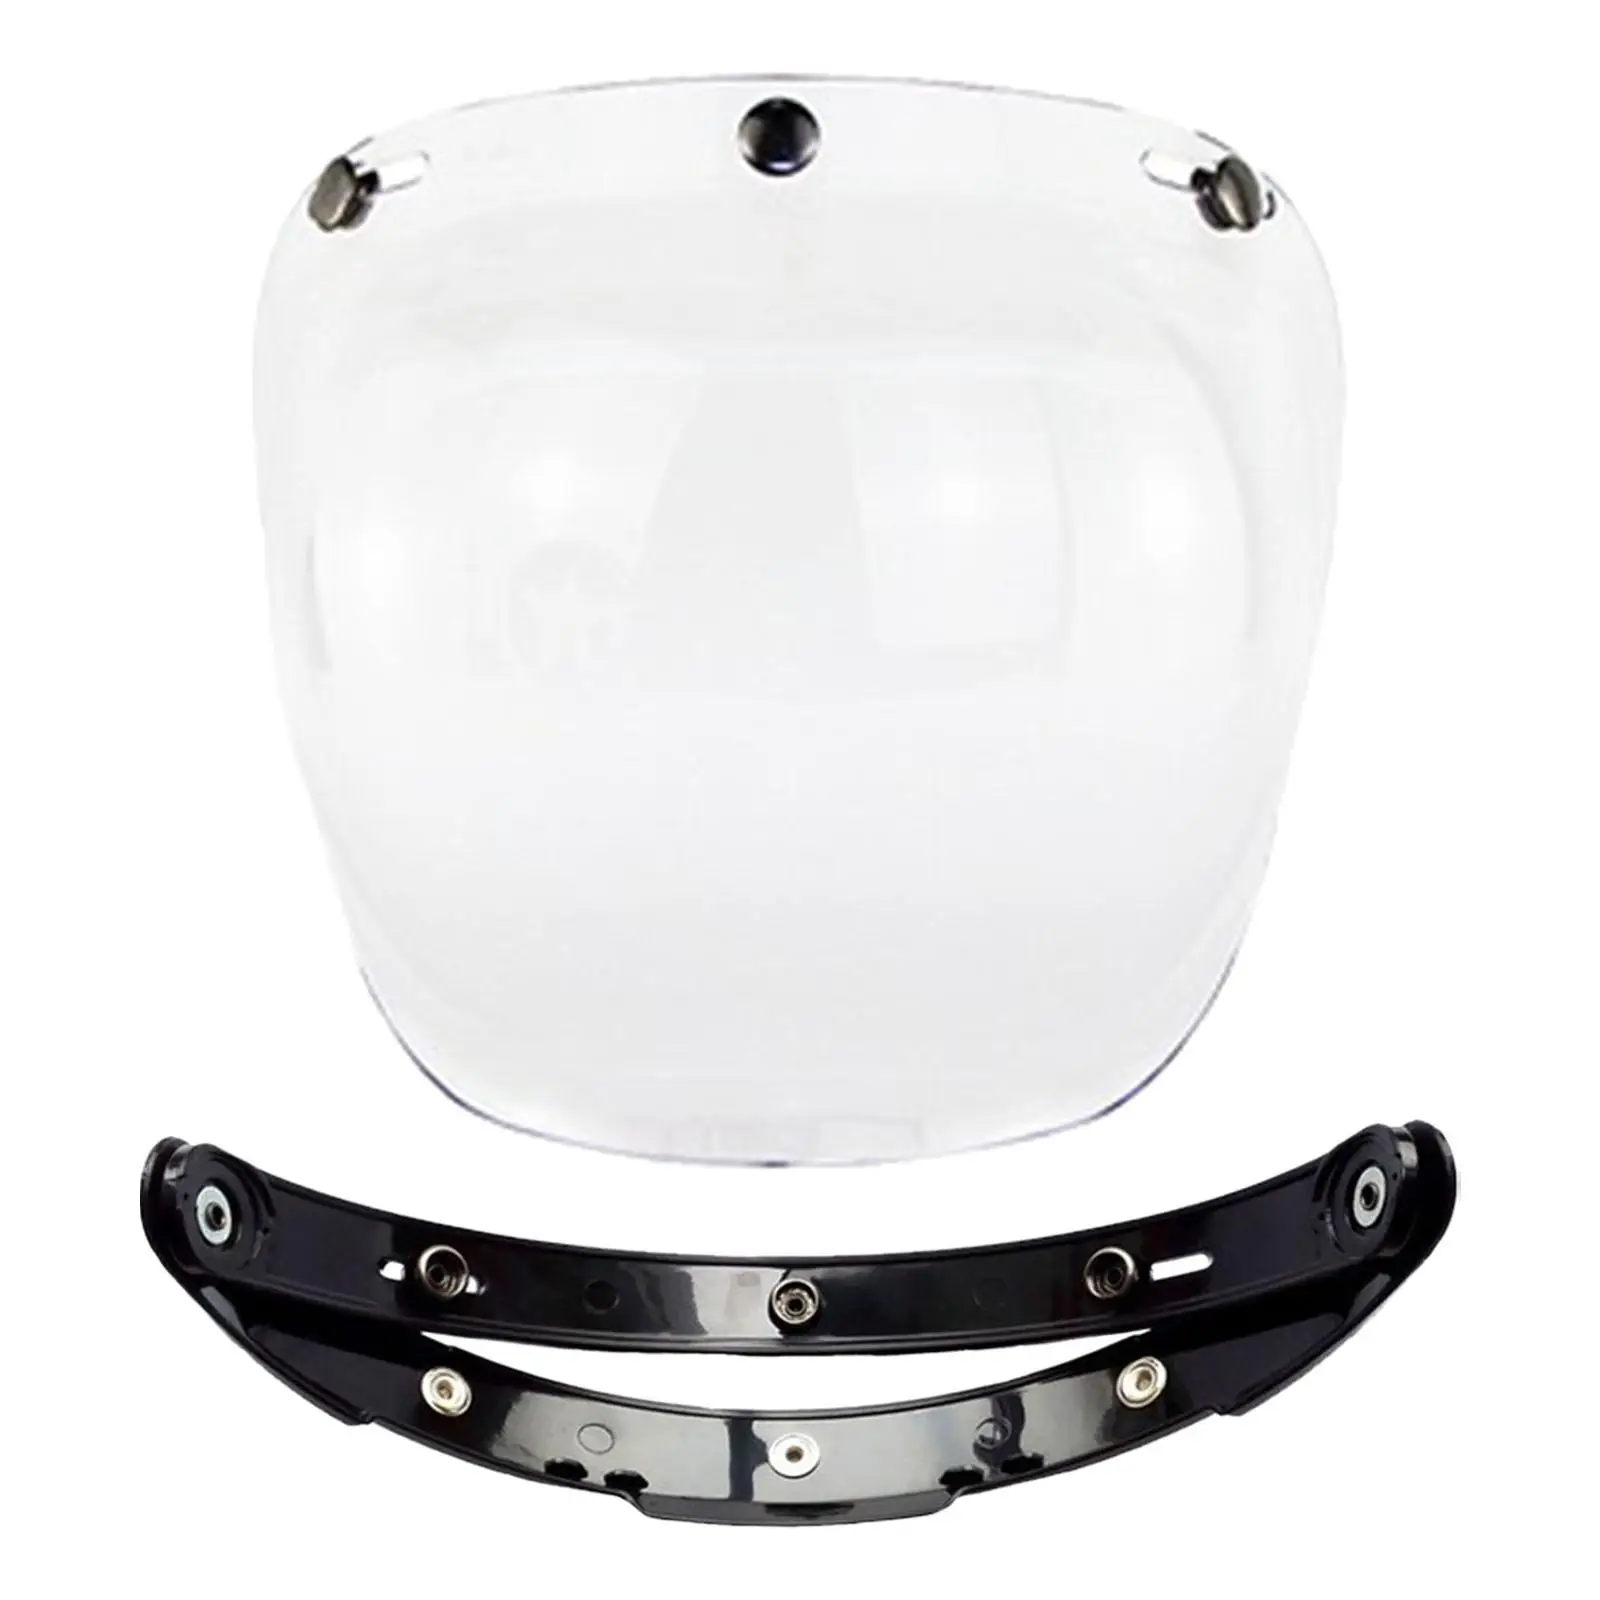 Windproof 3 Snap Visor Lens Shield, Lens Mask Flip up Down for Open Face